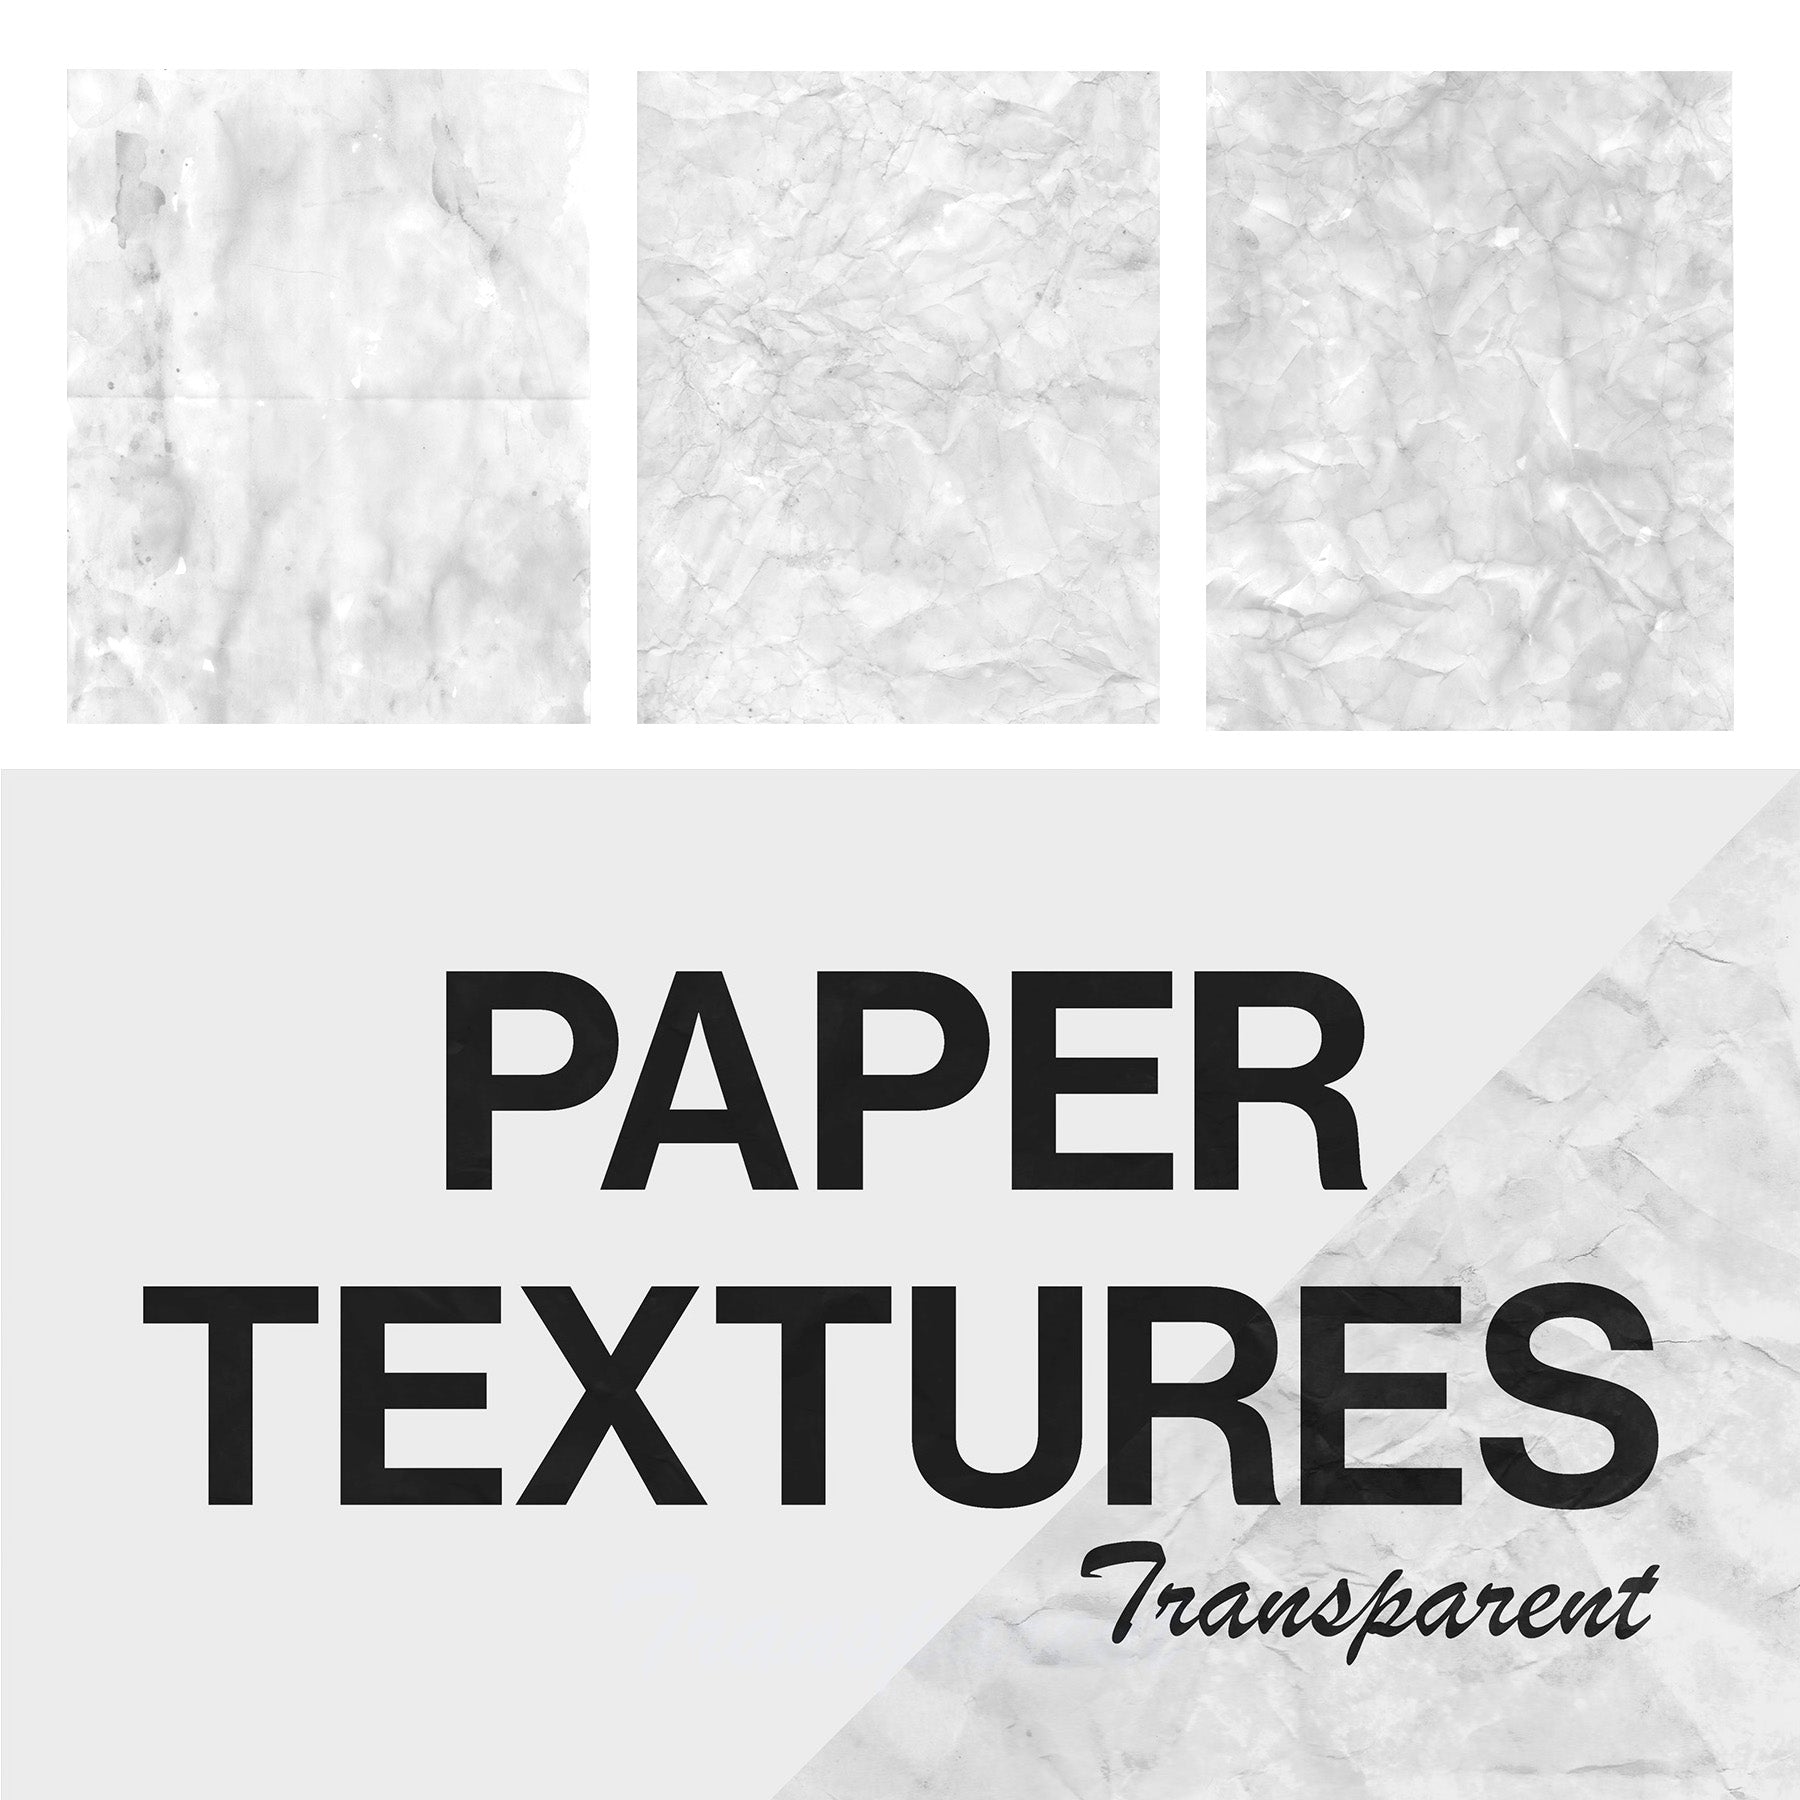 Transparent Paper Textures